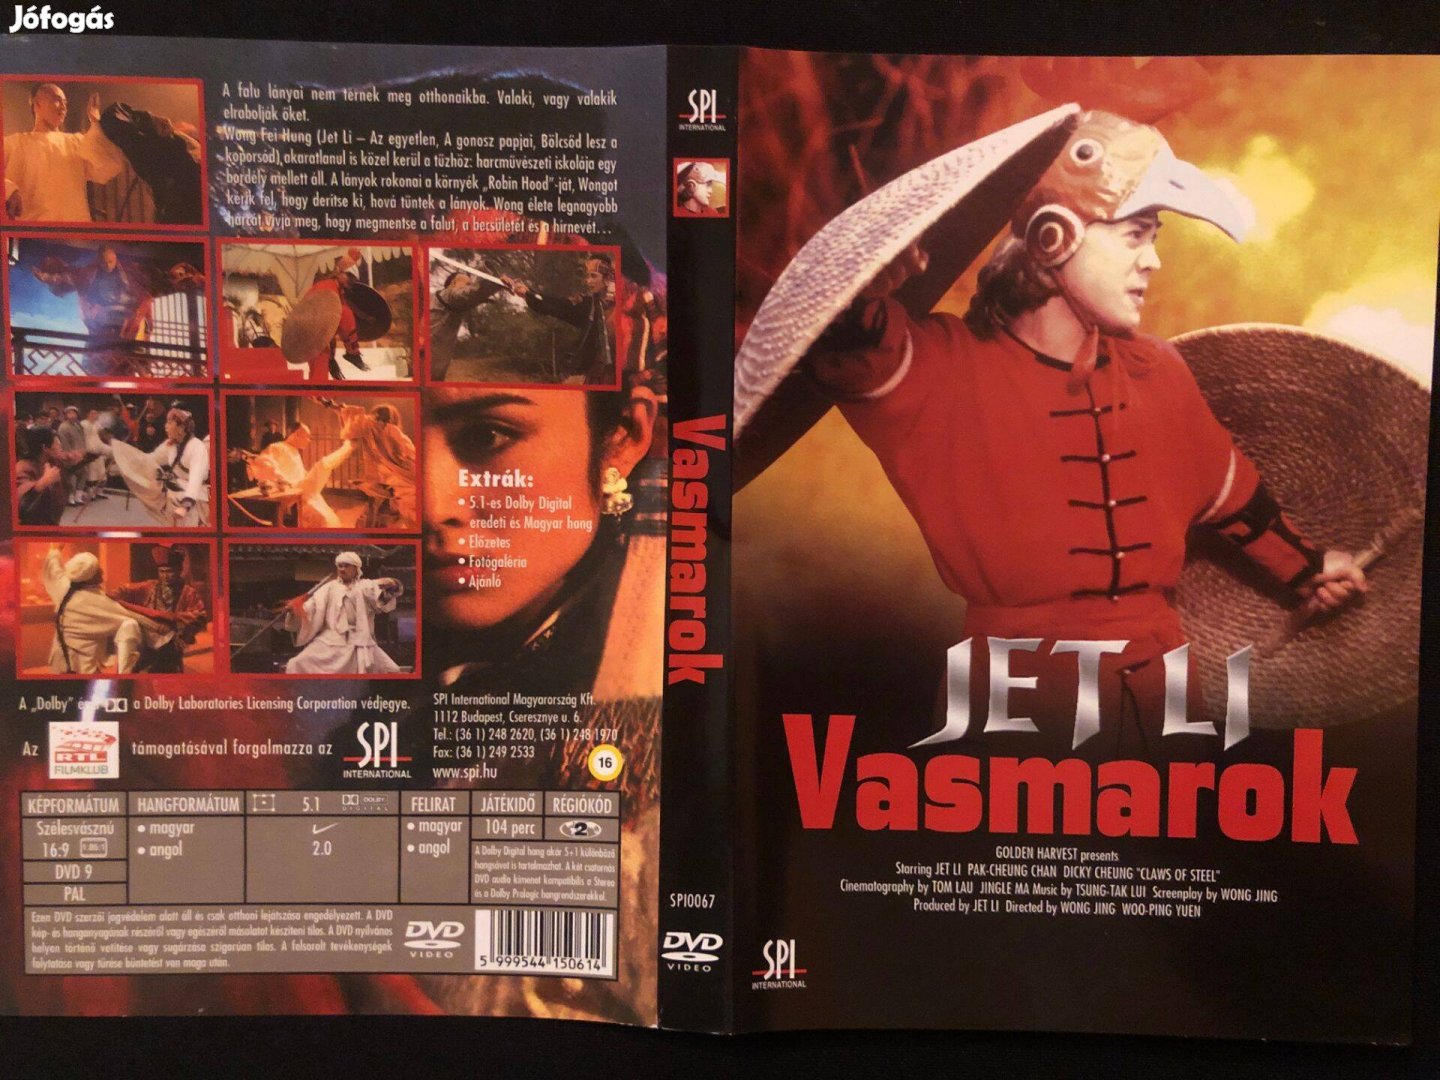 Vasmarok - Acélkarmok - Jet Li DVD (Pak-Cheung Chan)